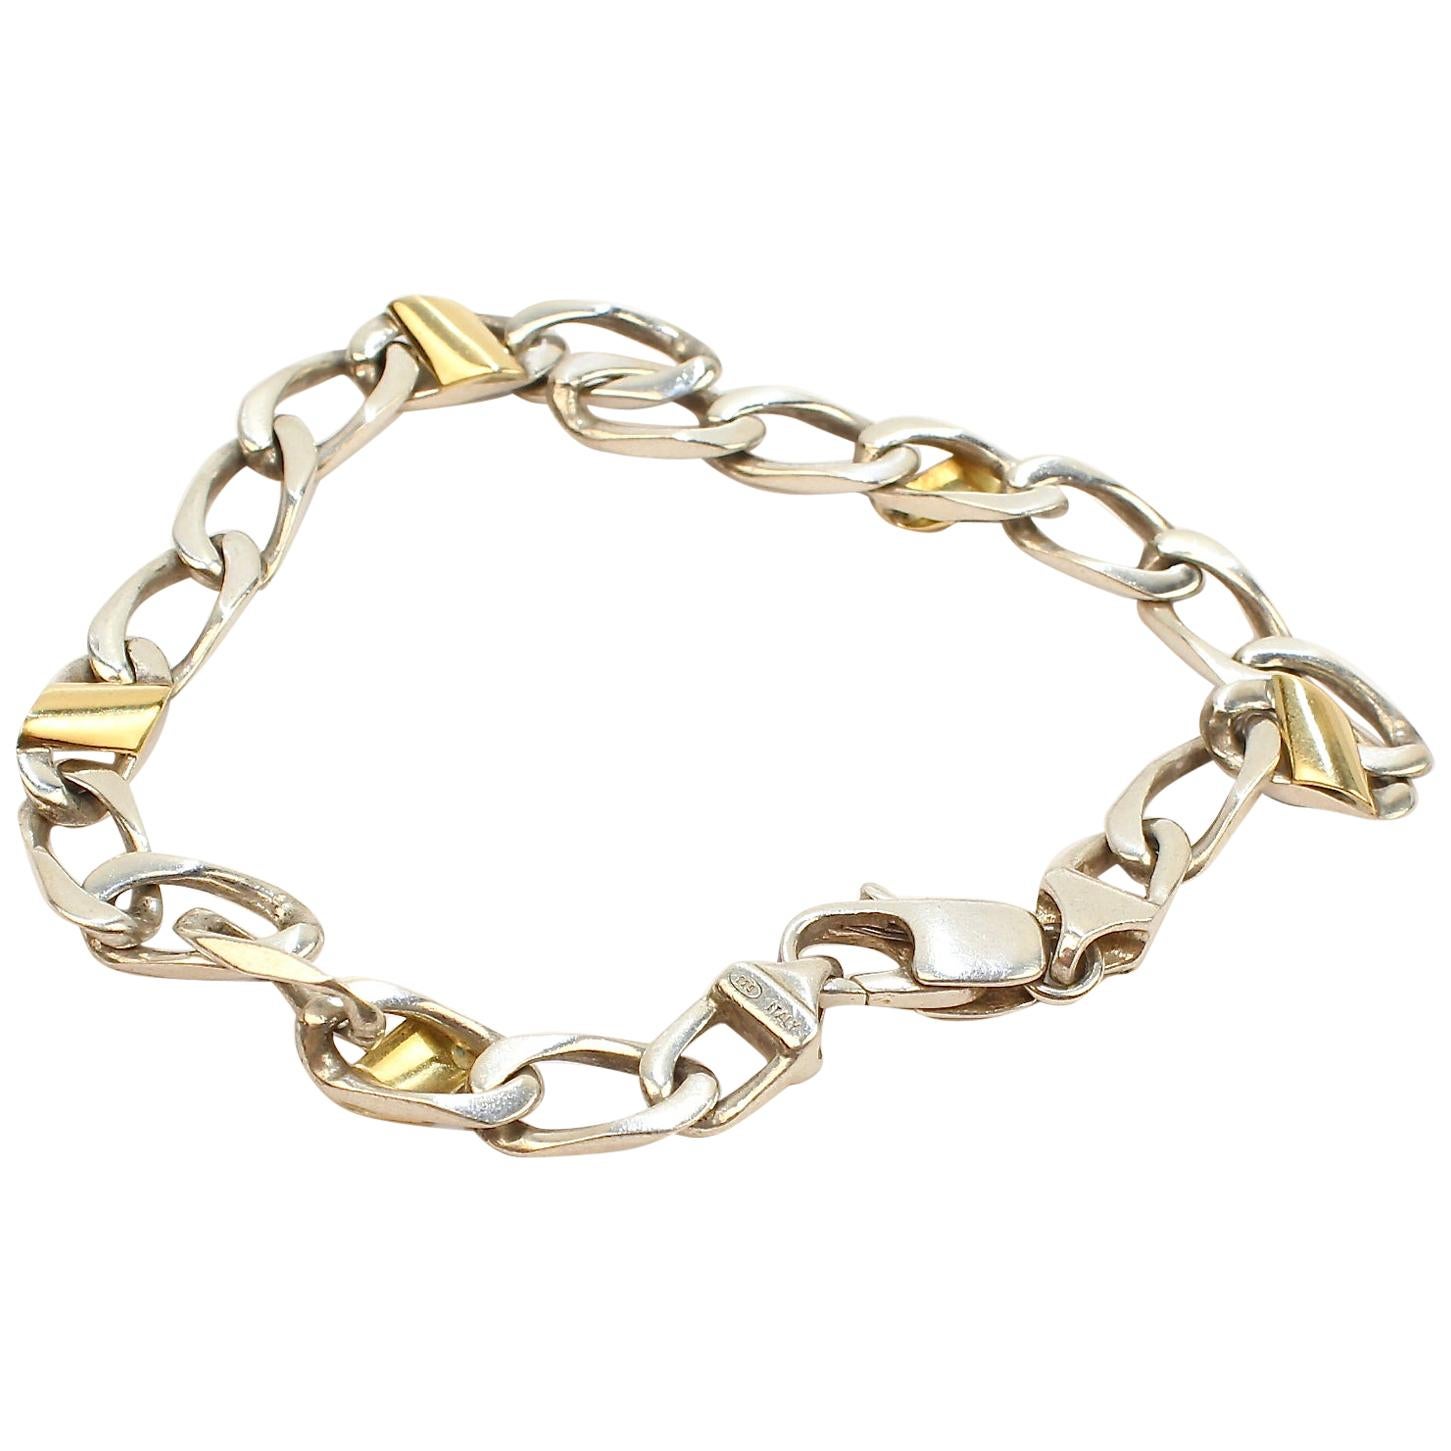 Tiffany & Co. Sterling Silver and 18 Karat Gold Curb Link Bracelet